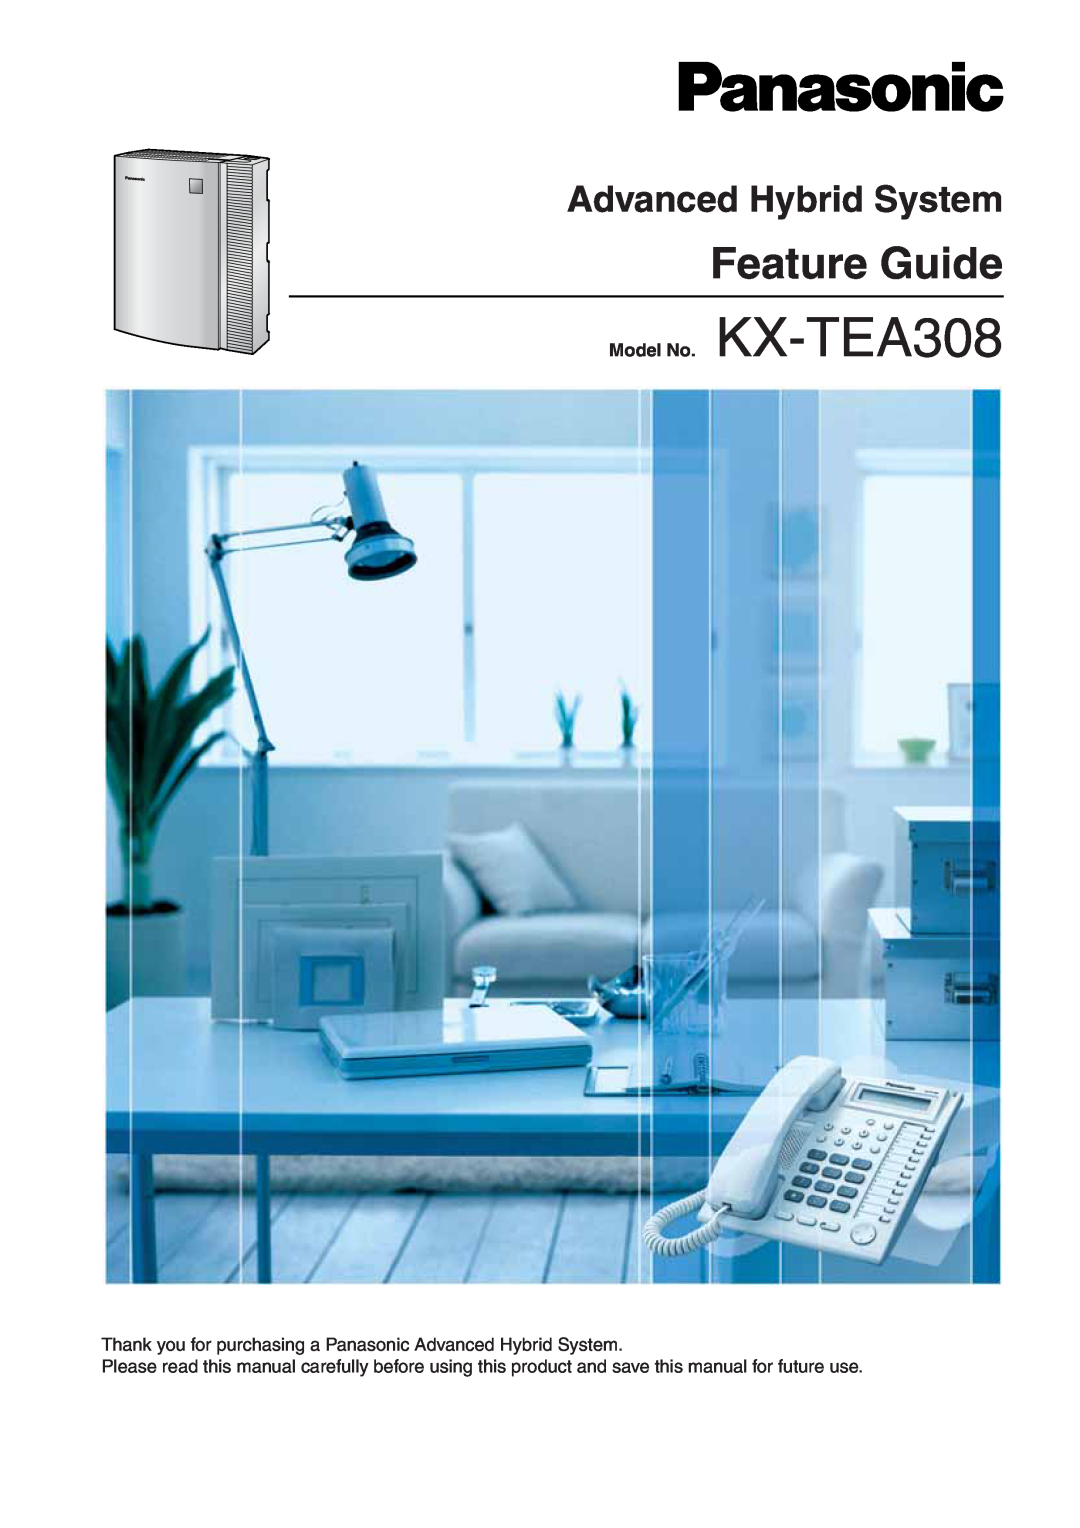 Panasonic kx-tea308 manual Feature Guide, Advanced Hybrid System 